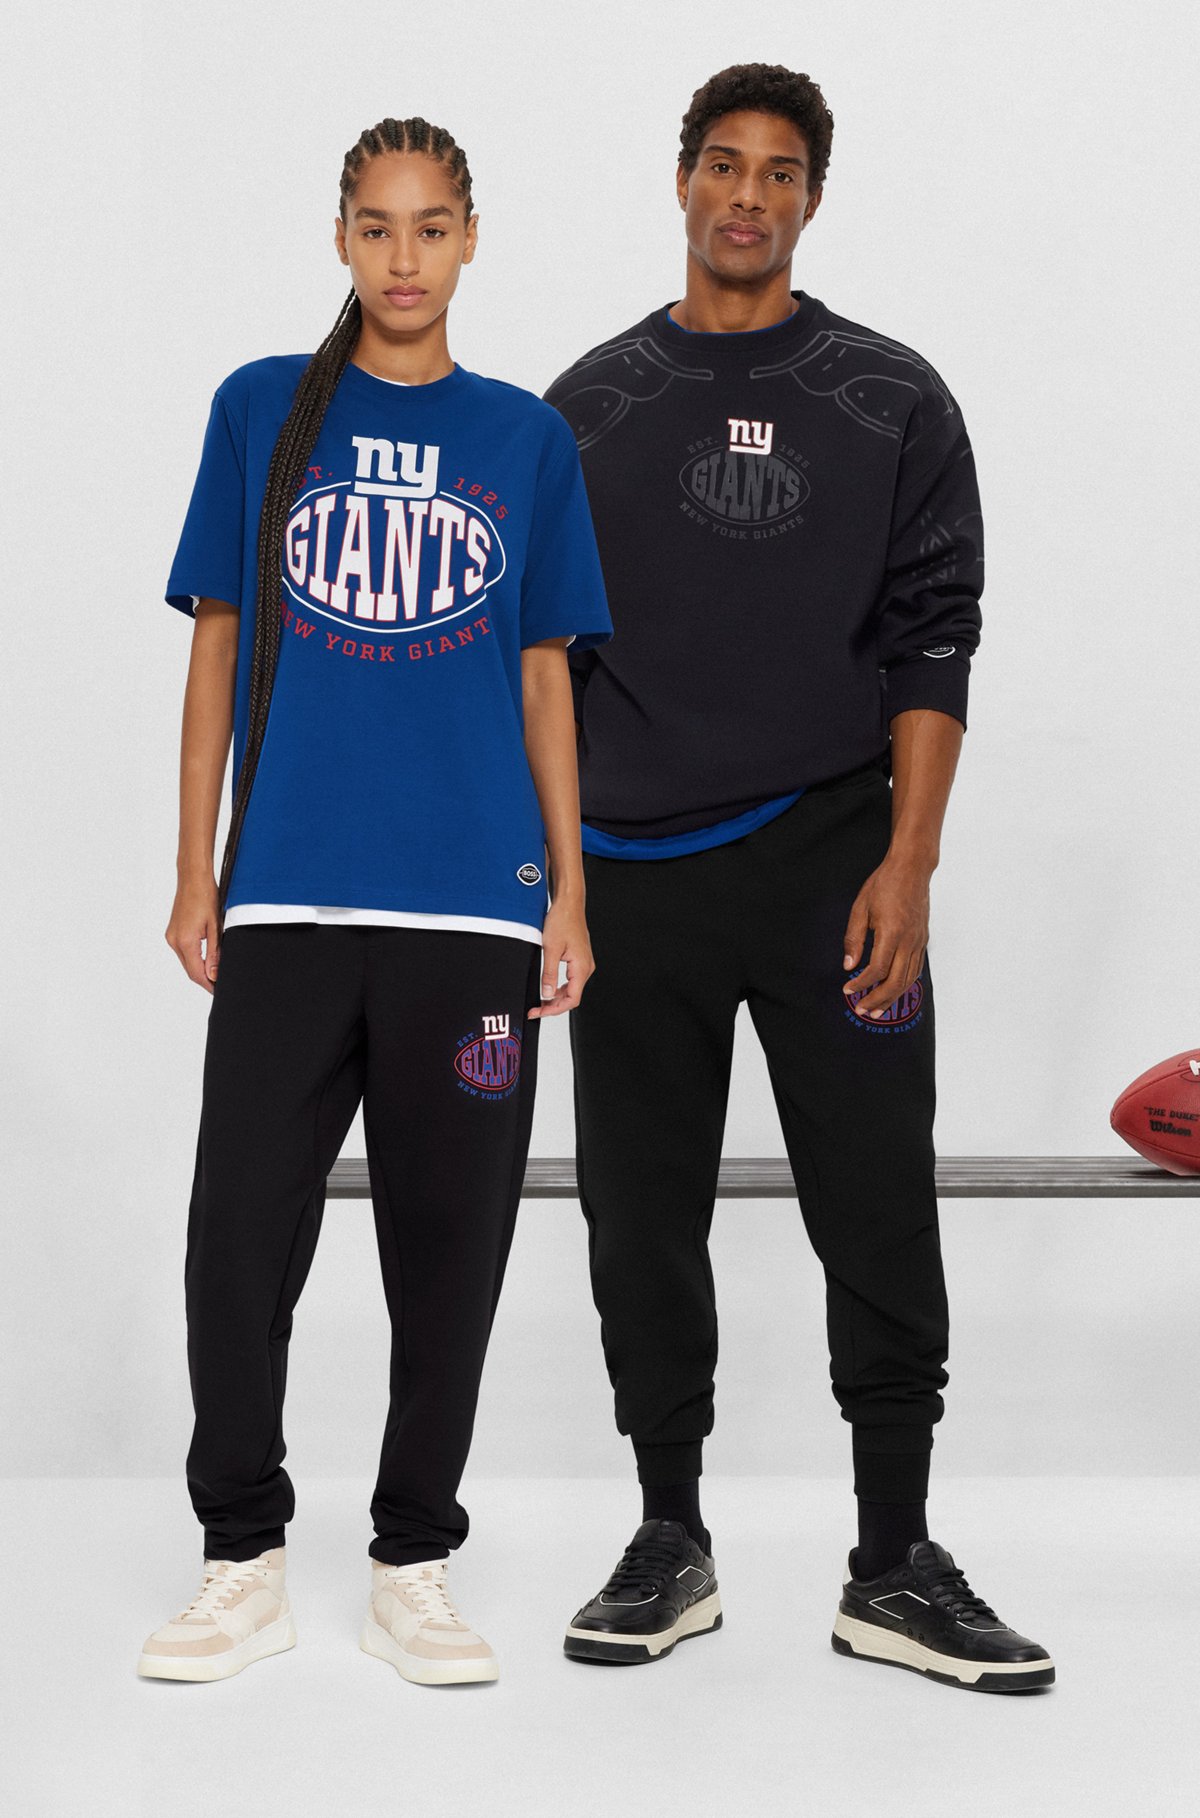 Pantalones de chándal BOSS x NFL de mezcla de algodón con detalle de la colaboración, Giants